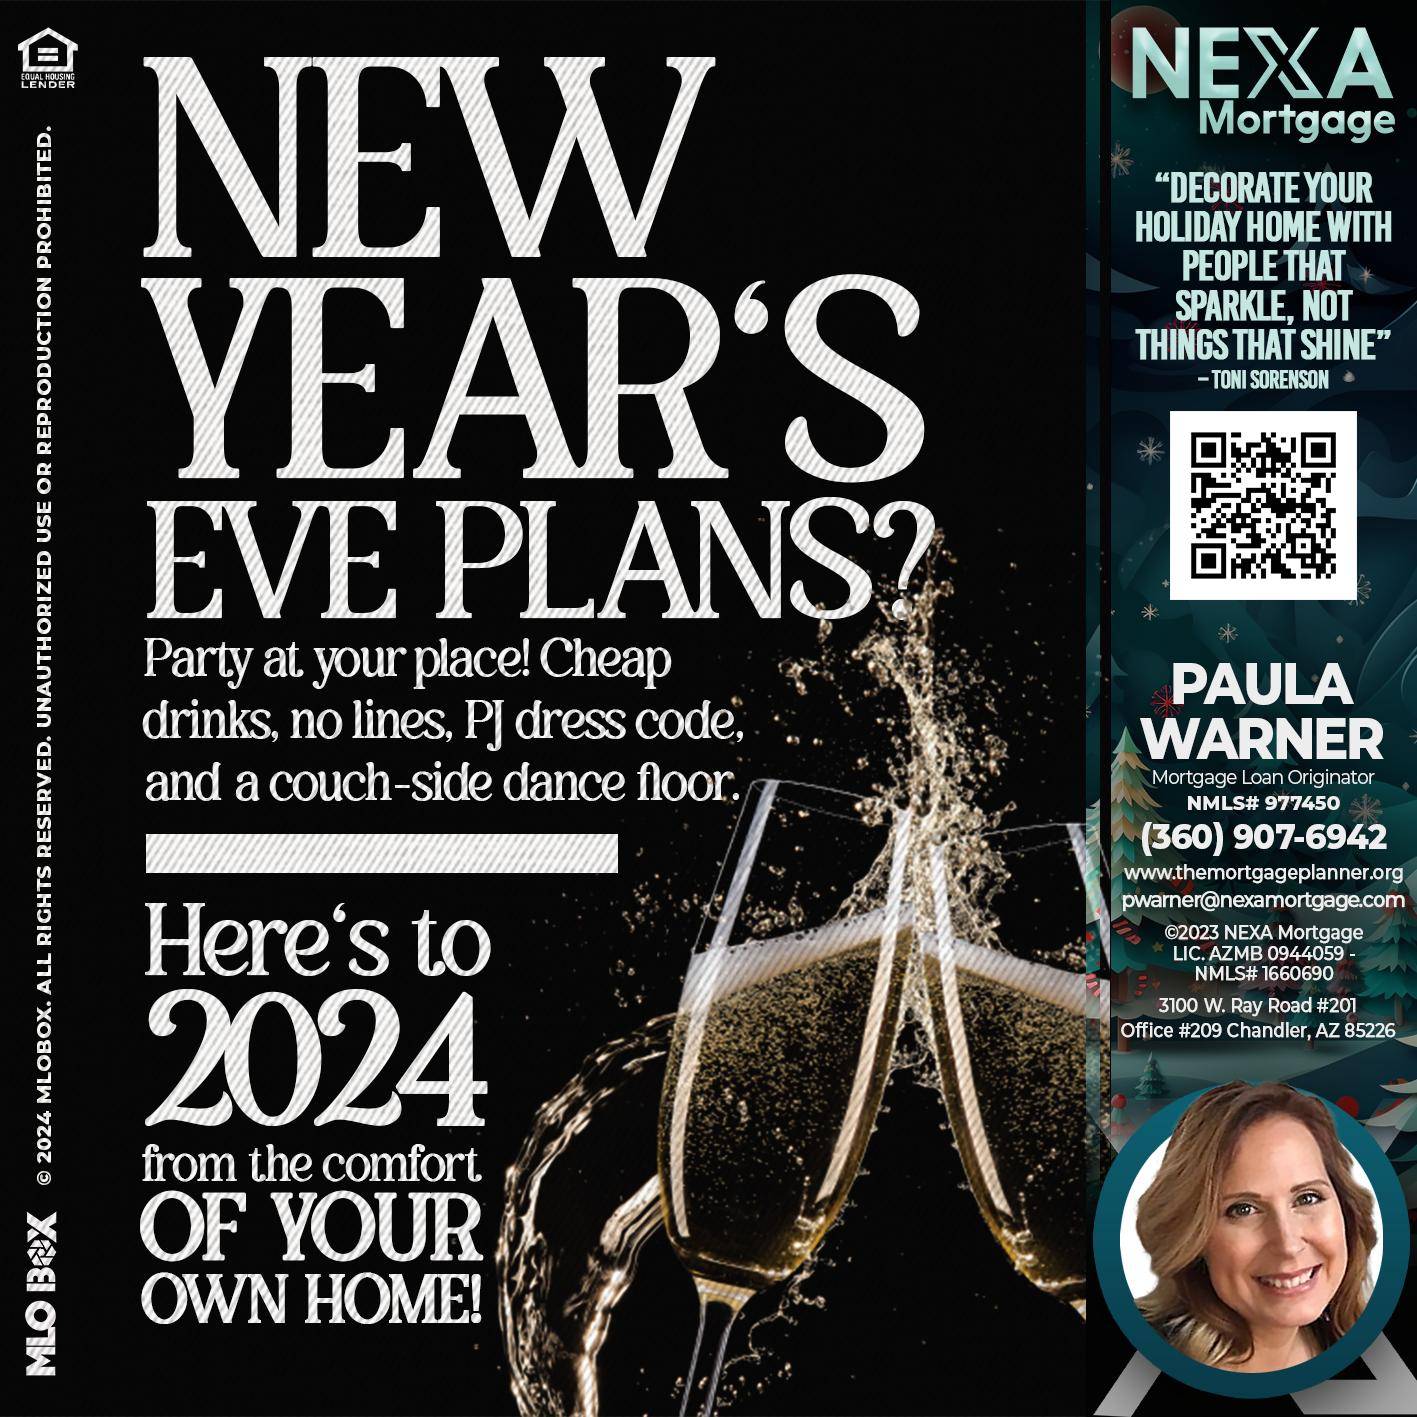 NEW YEAR - Paula Warner -Mortgage Loan Originator